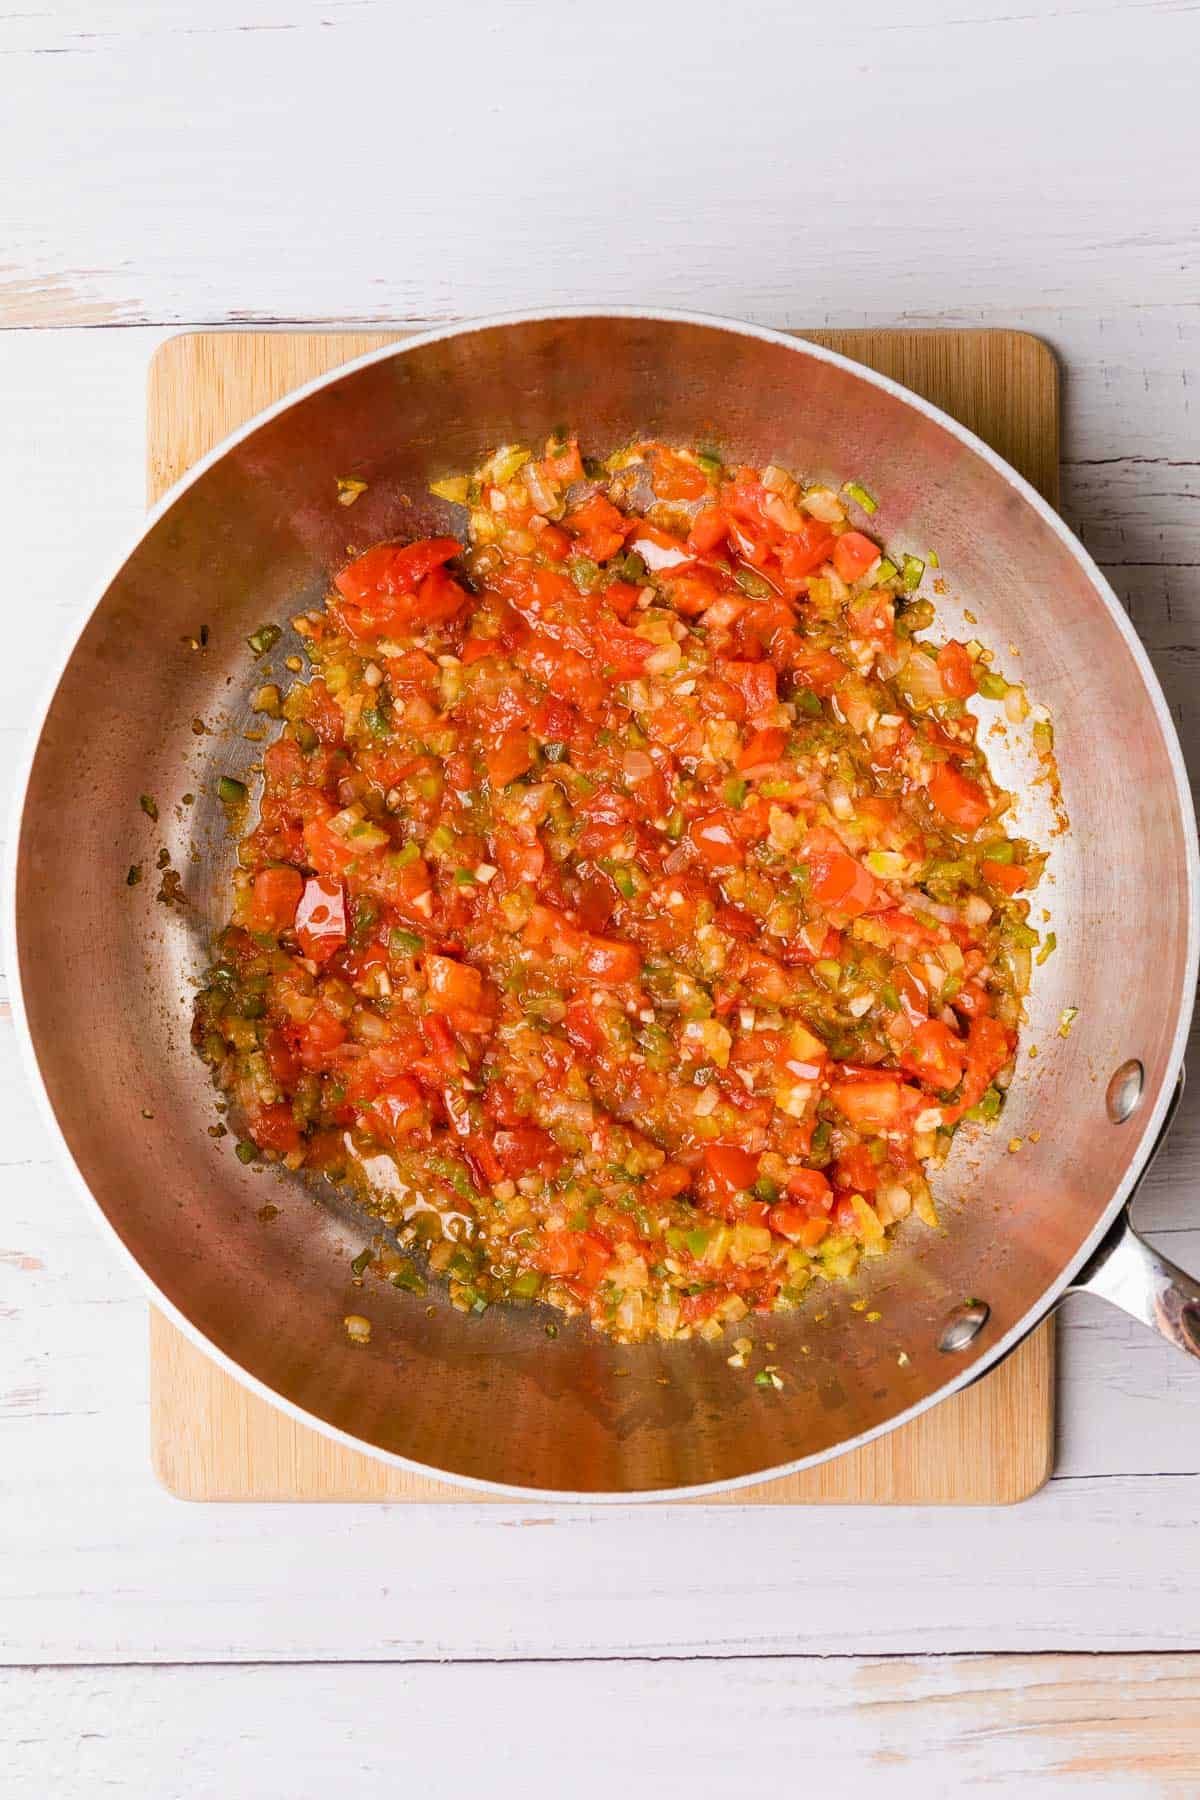 adding fresh tomatoes to make the sauce